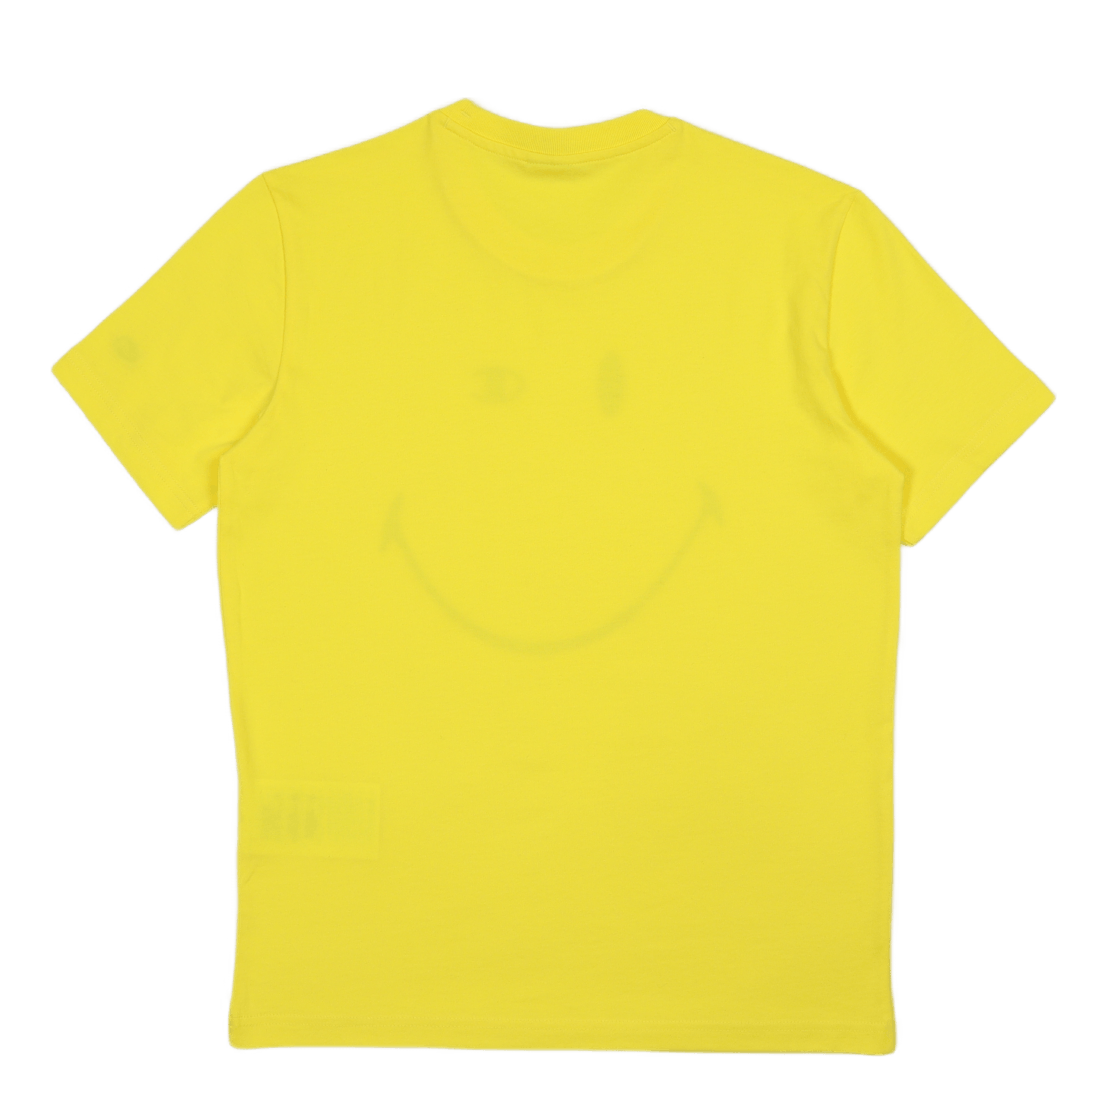 Champion X Smiley - Crewneck T Blazing Yellow